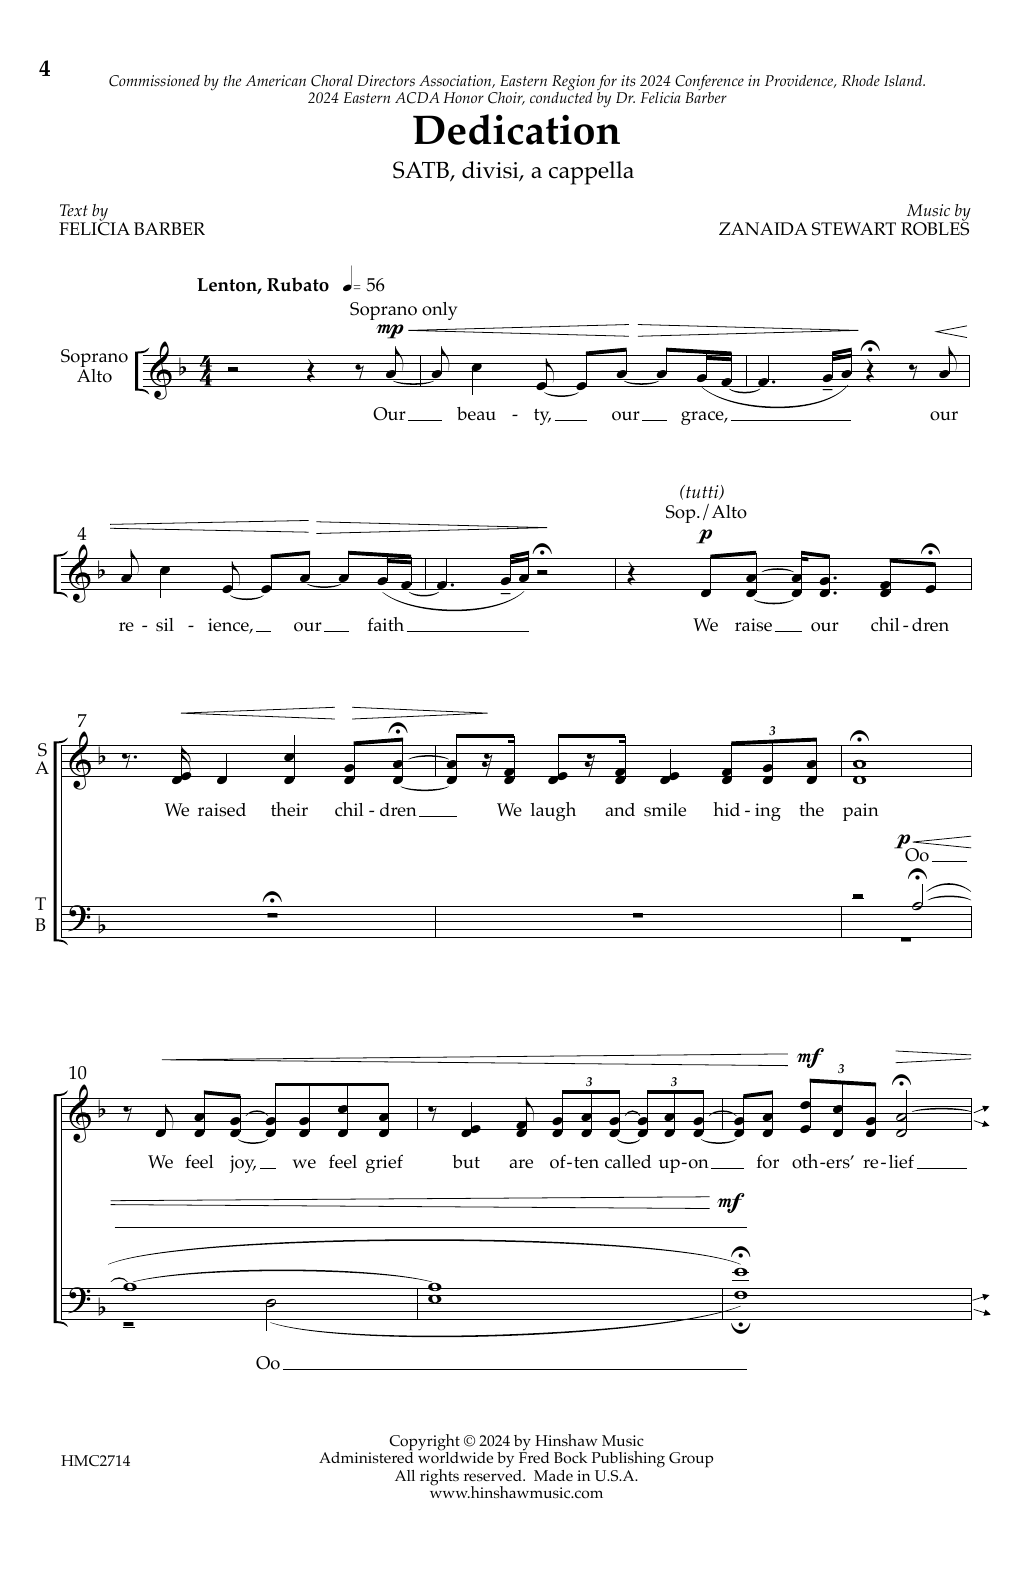 Zanaida Stewart Robles Dedication sheet music notes printable PDF score